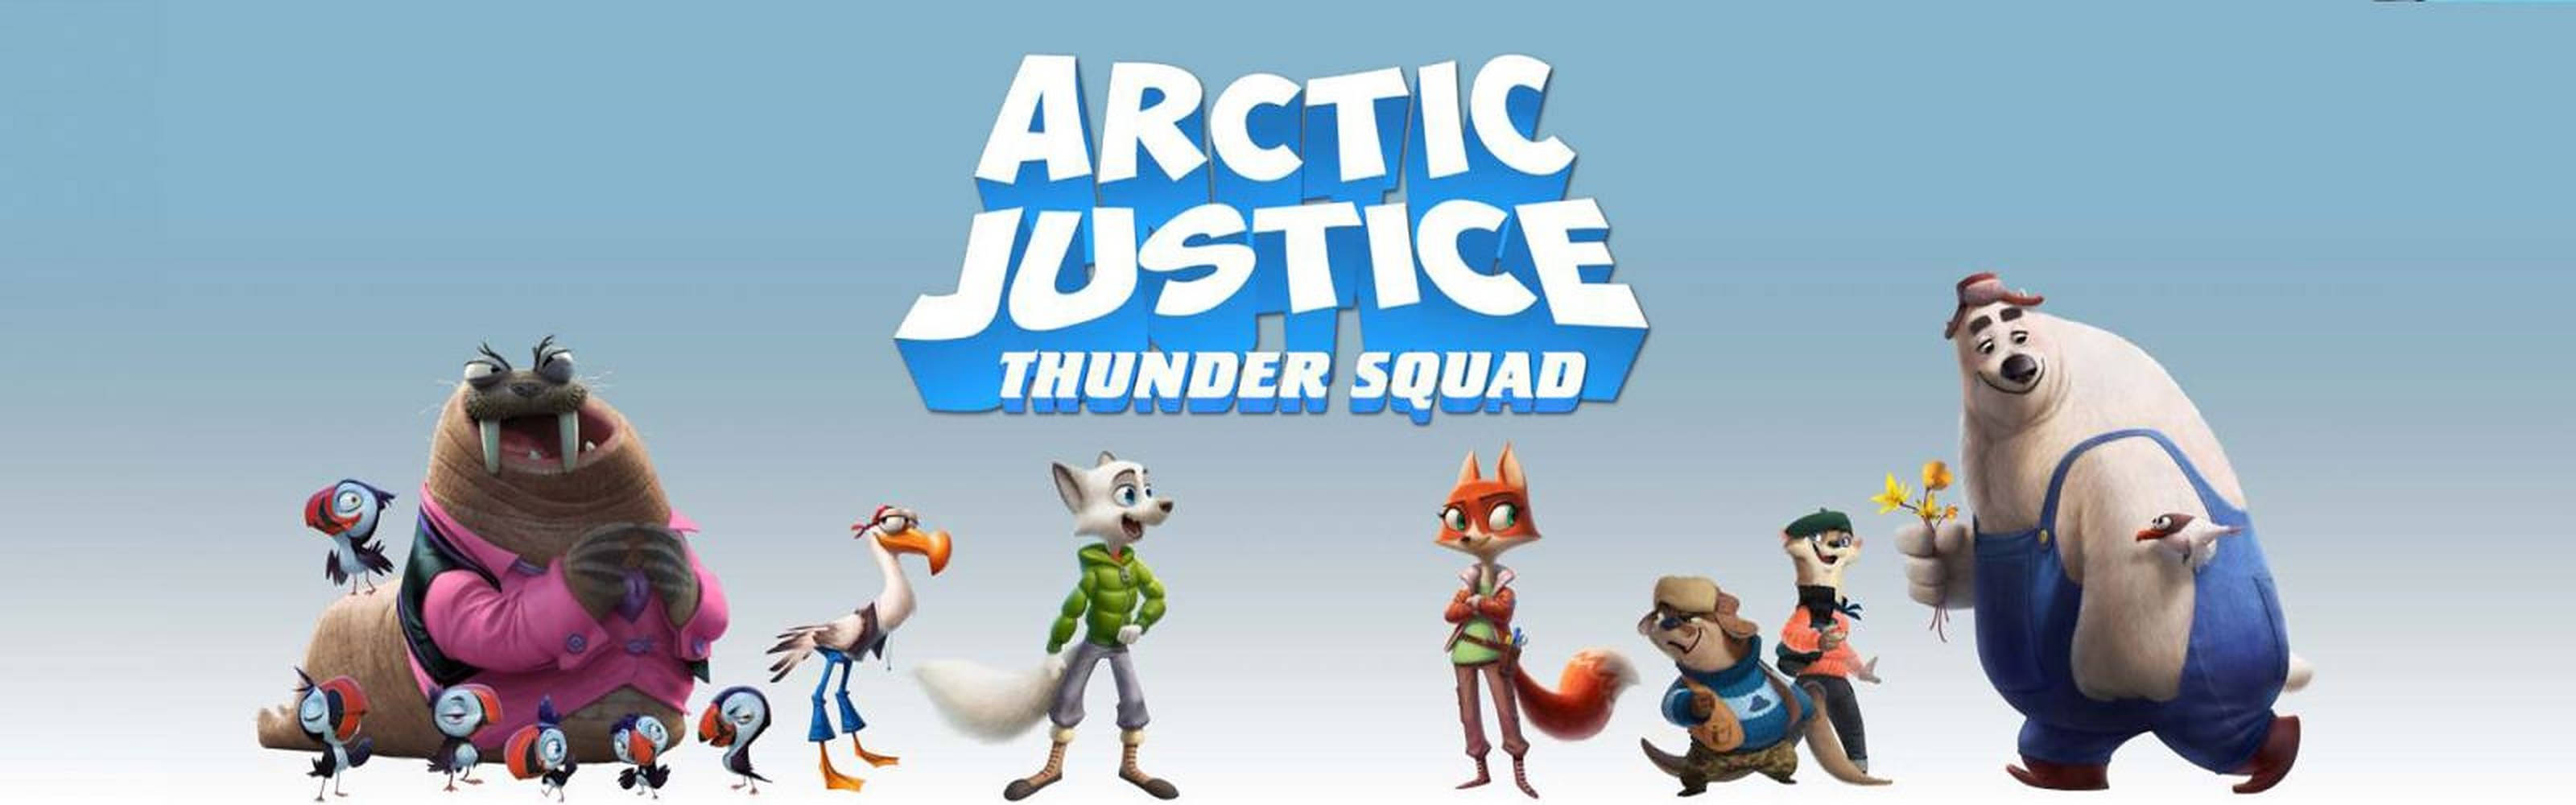 Arctic Justice Thunder Squad Wallpaper